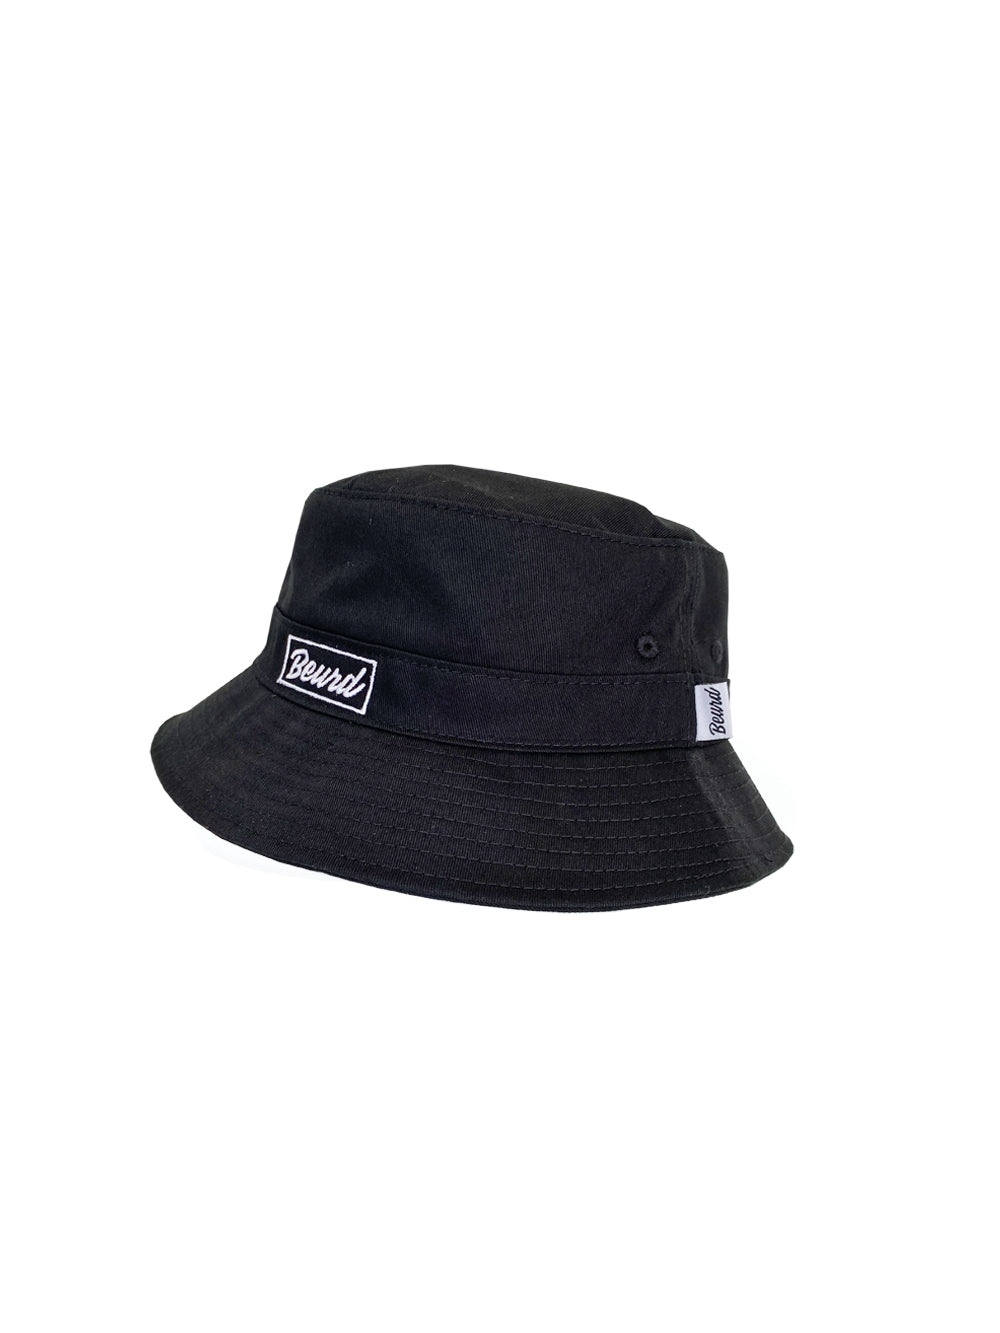 Bob / bucket hat noir tendance 